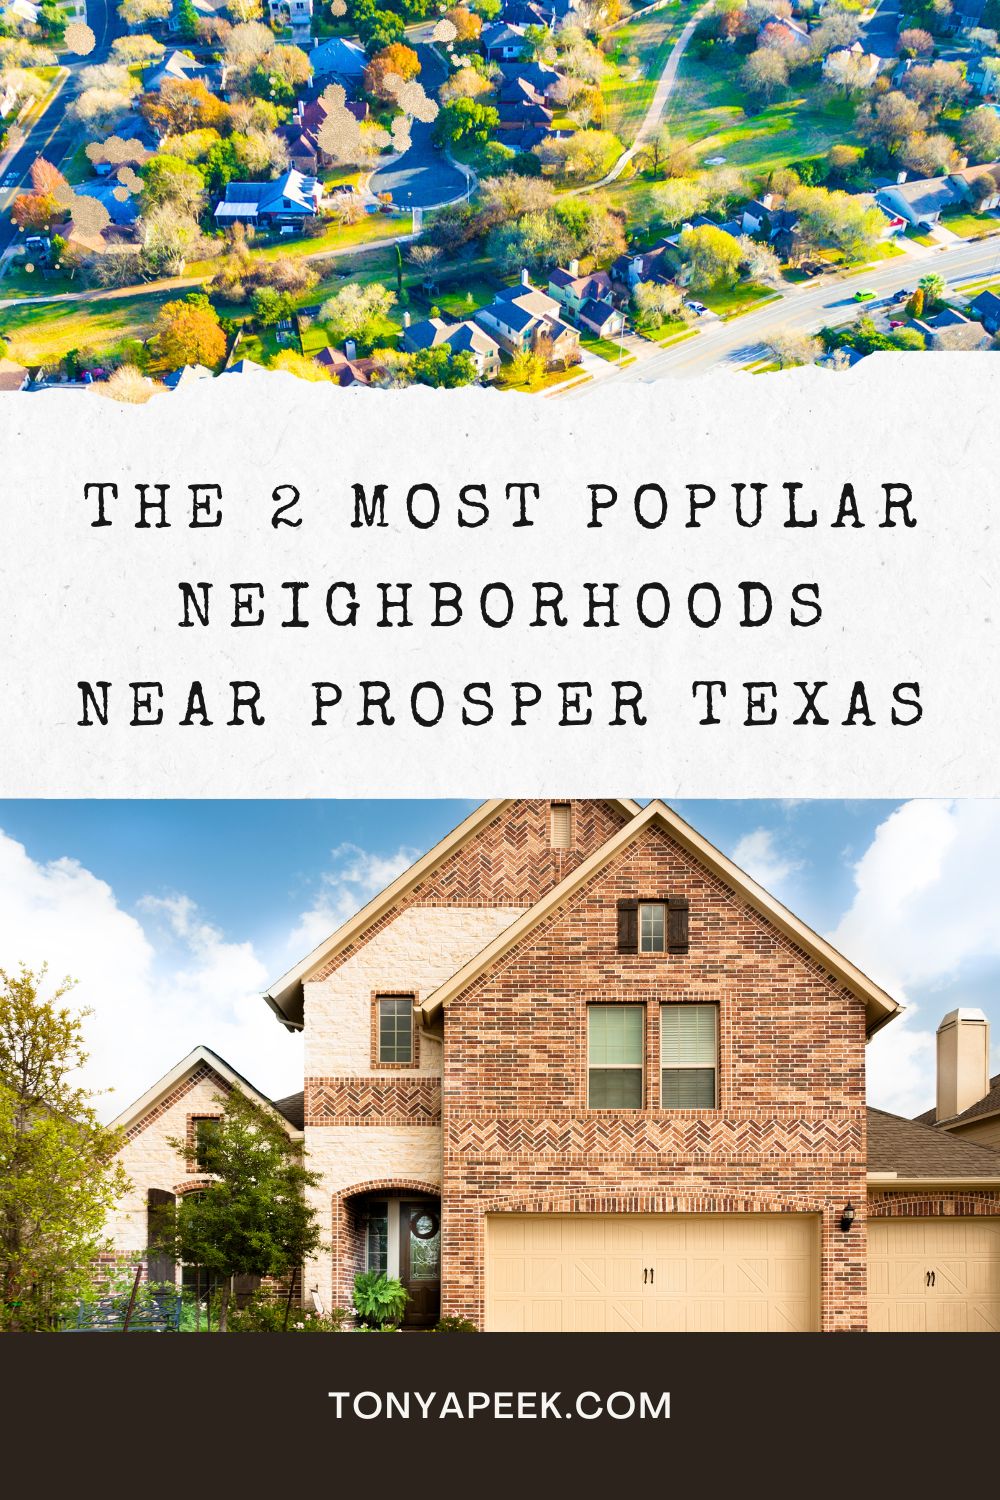 The 2 Most Popular Neighborhoods Near Prosper Texas